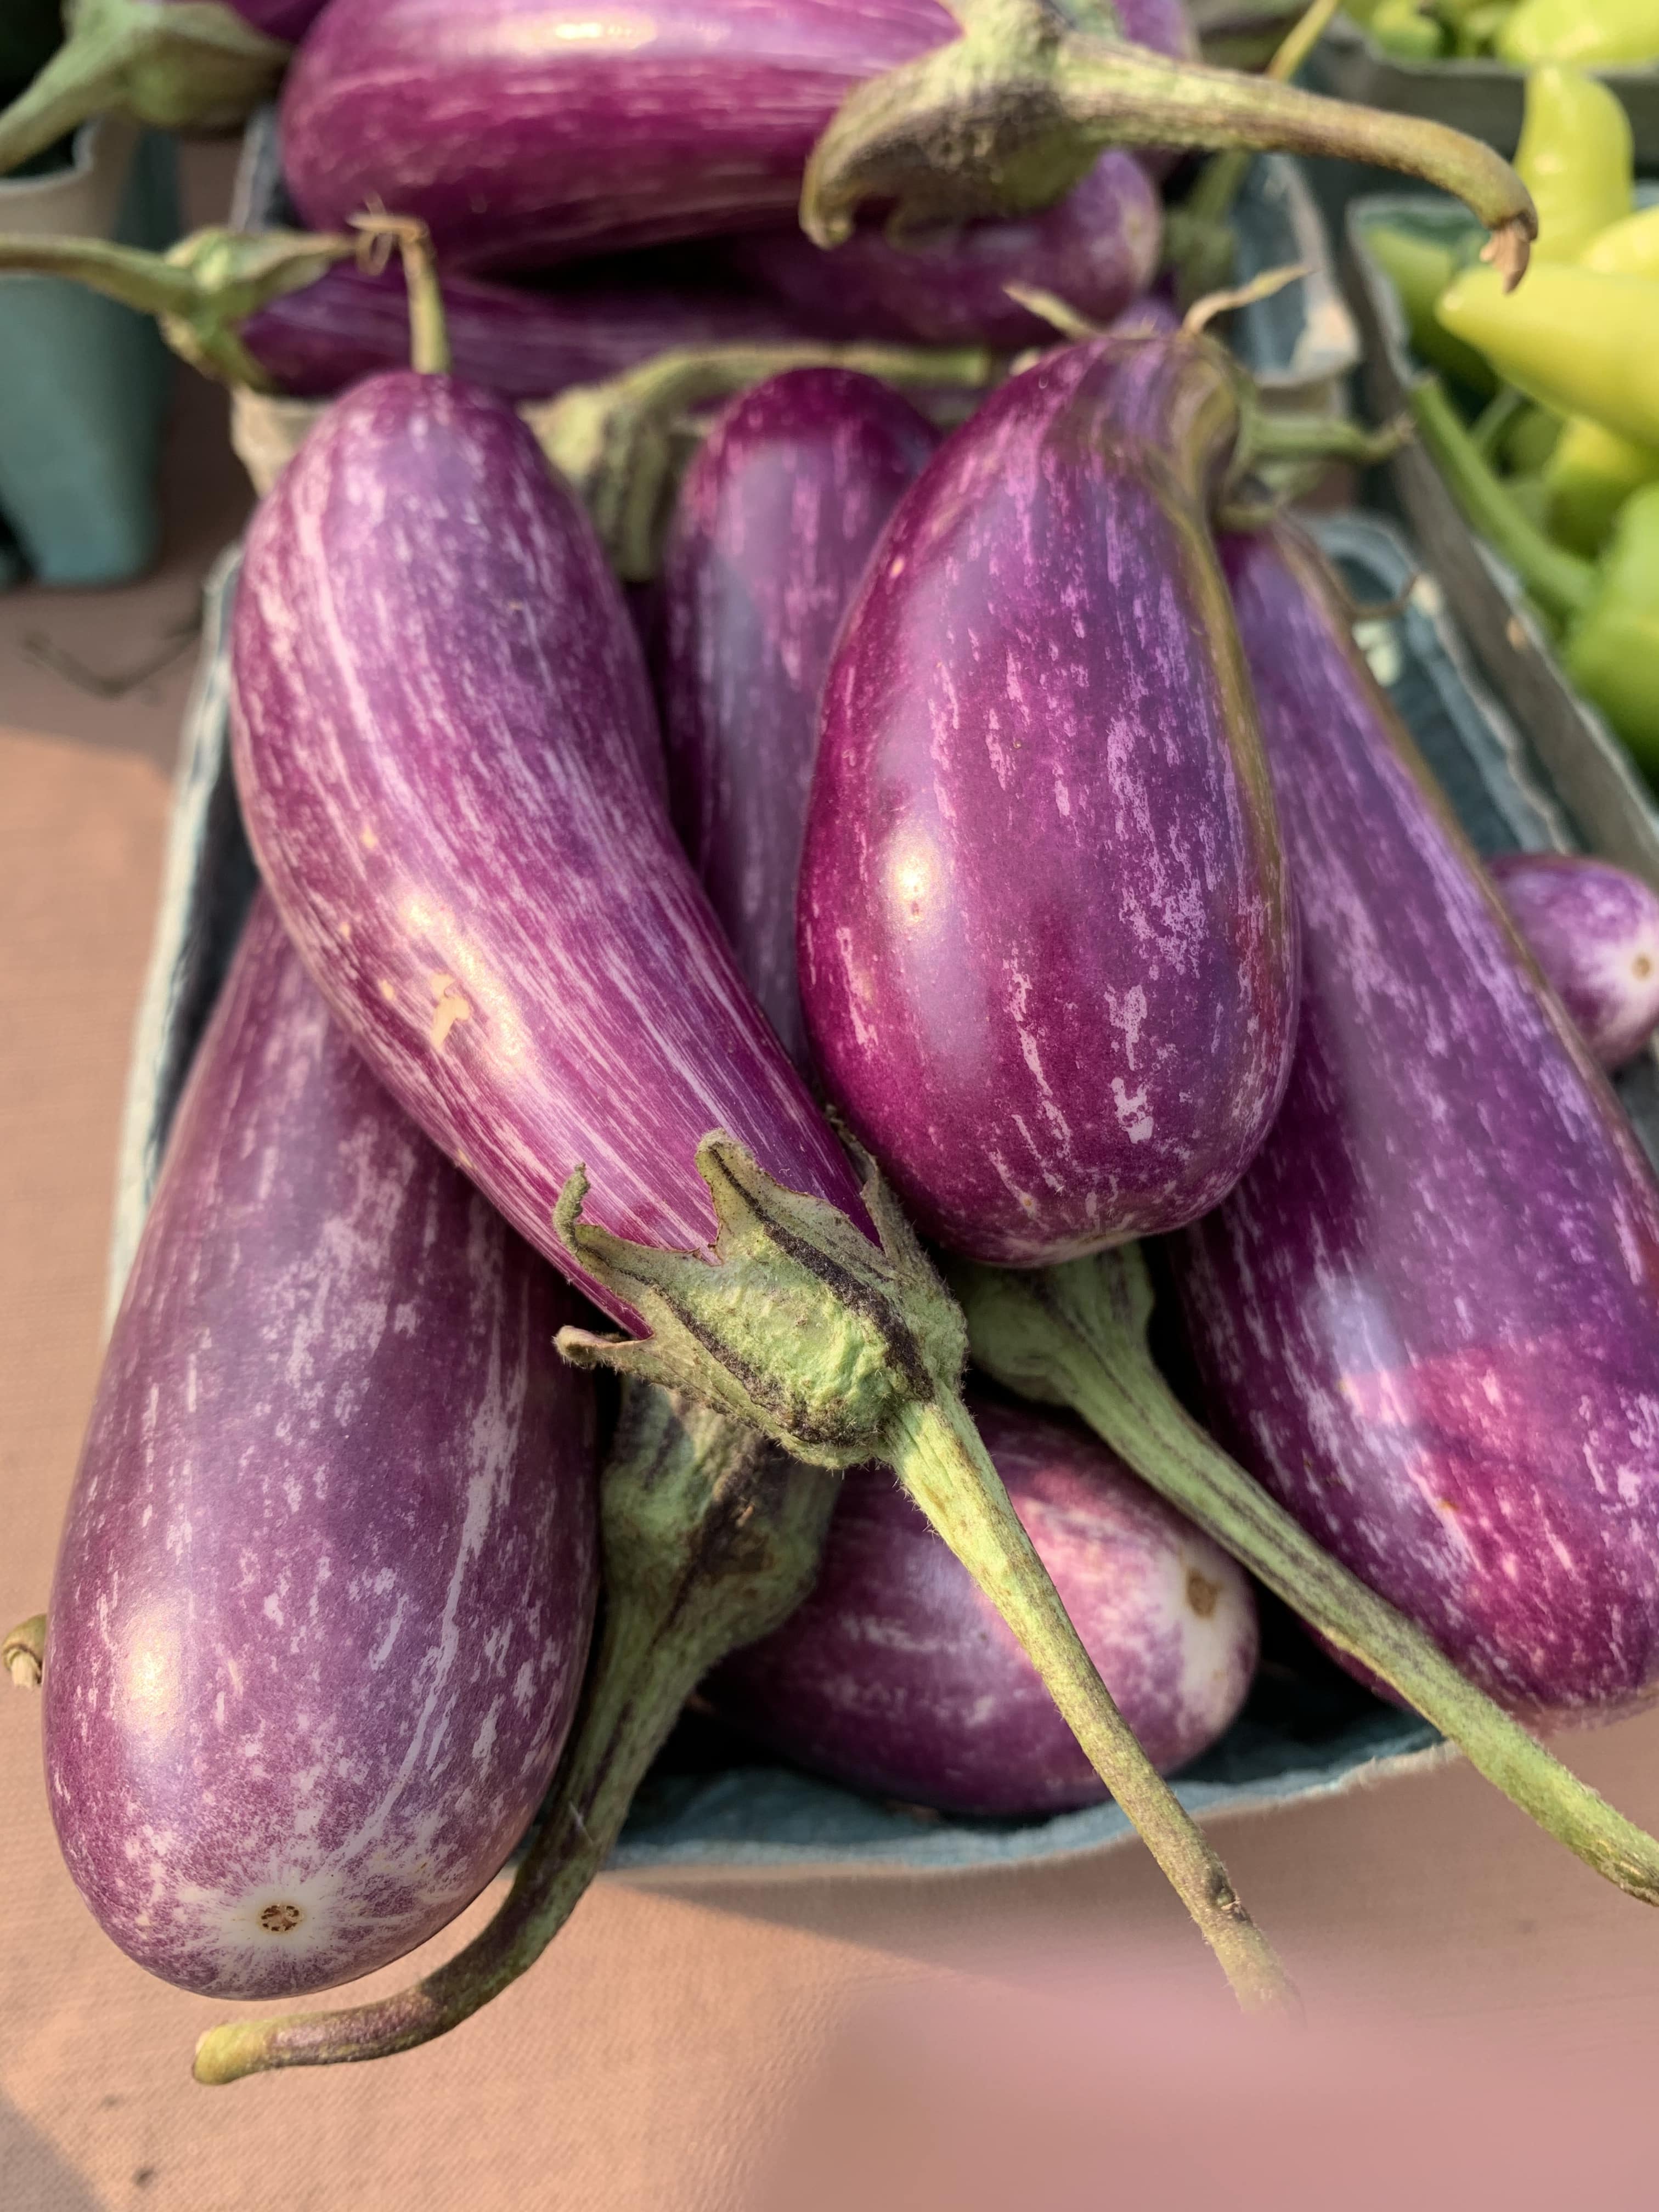 Fairy Tail Eggplant Image